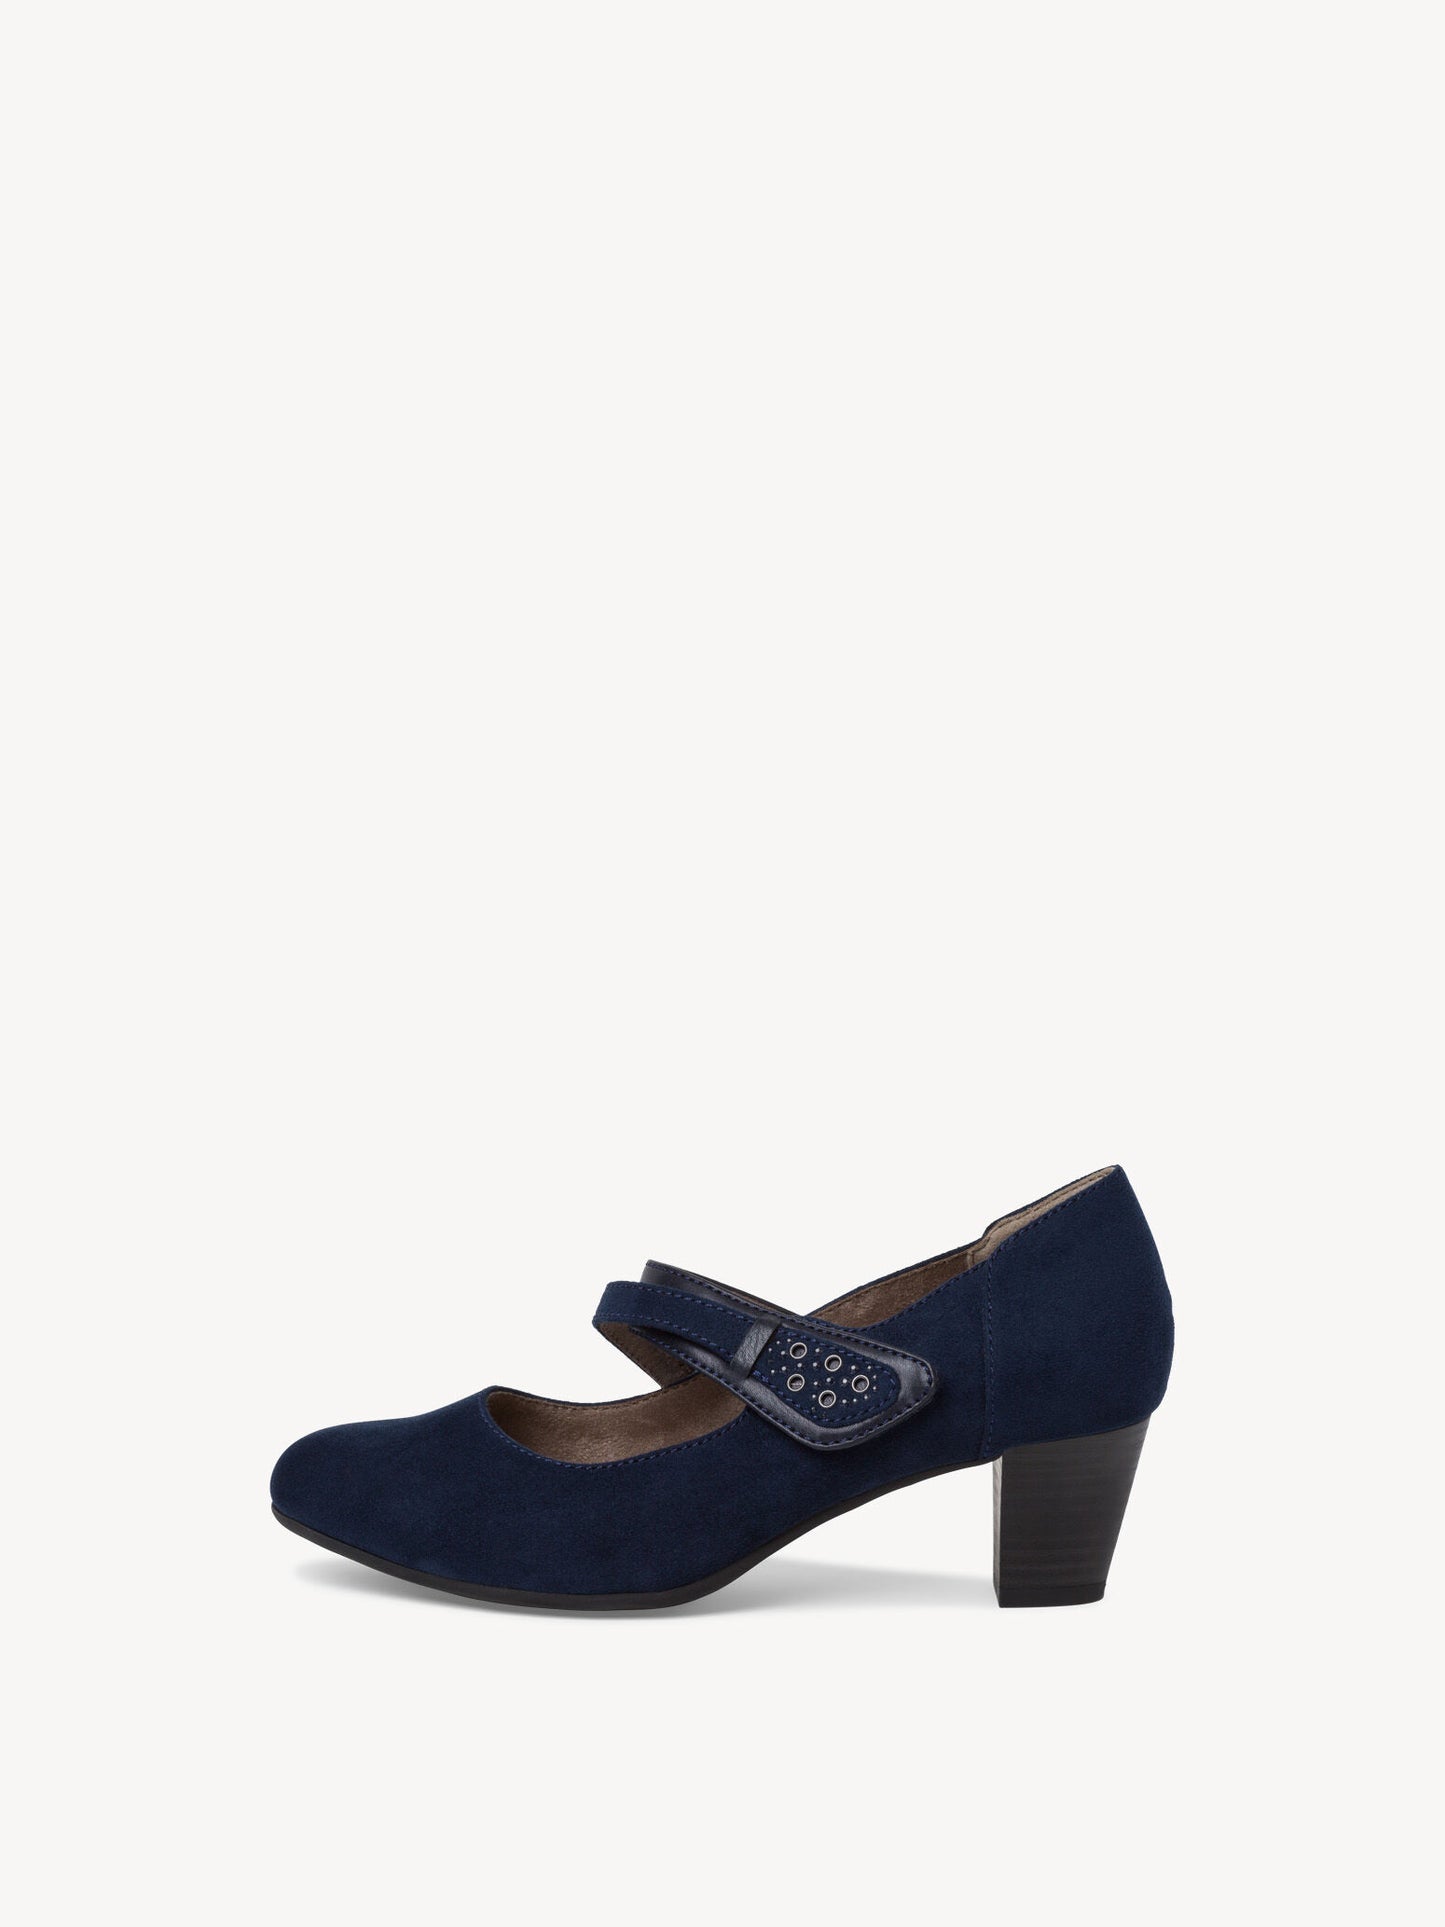 Jana Women's 8-8-24464-20 805 Softline Heel Pumps Shoes Navy Blue